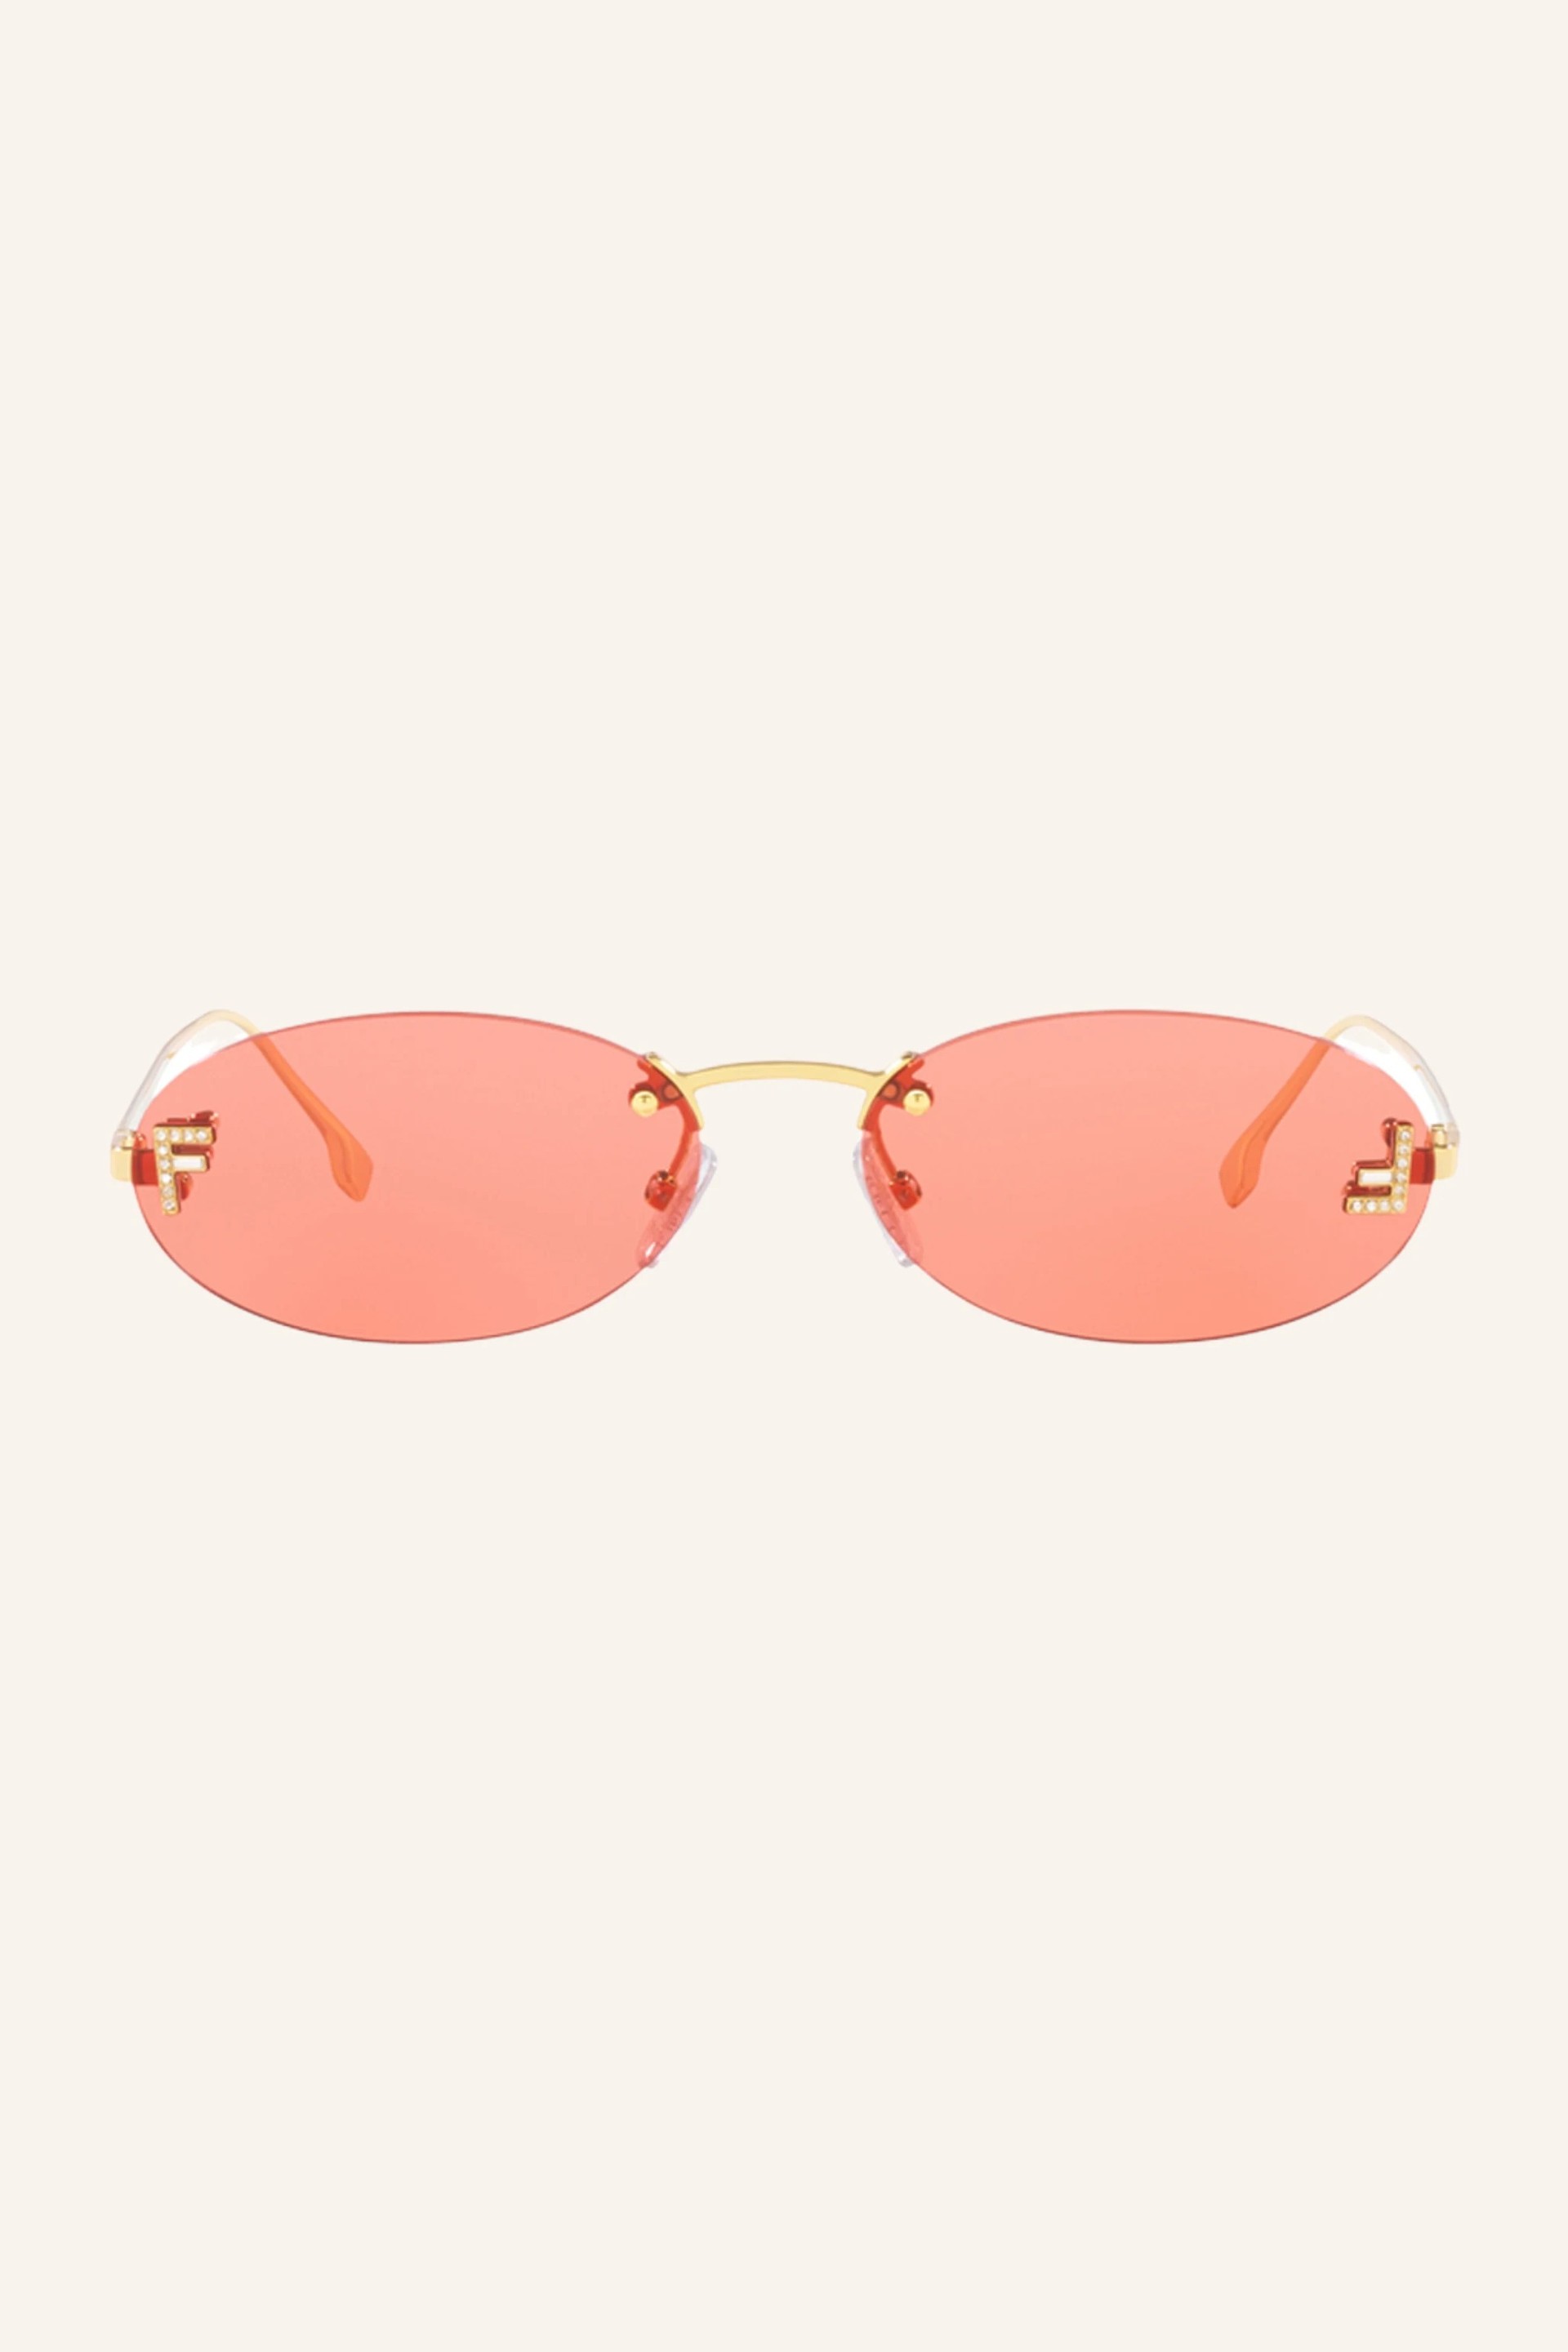 Fendi First Sunglasses - Gold Shiny